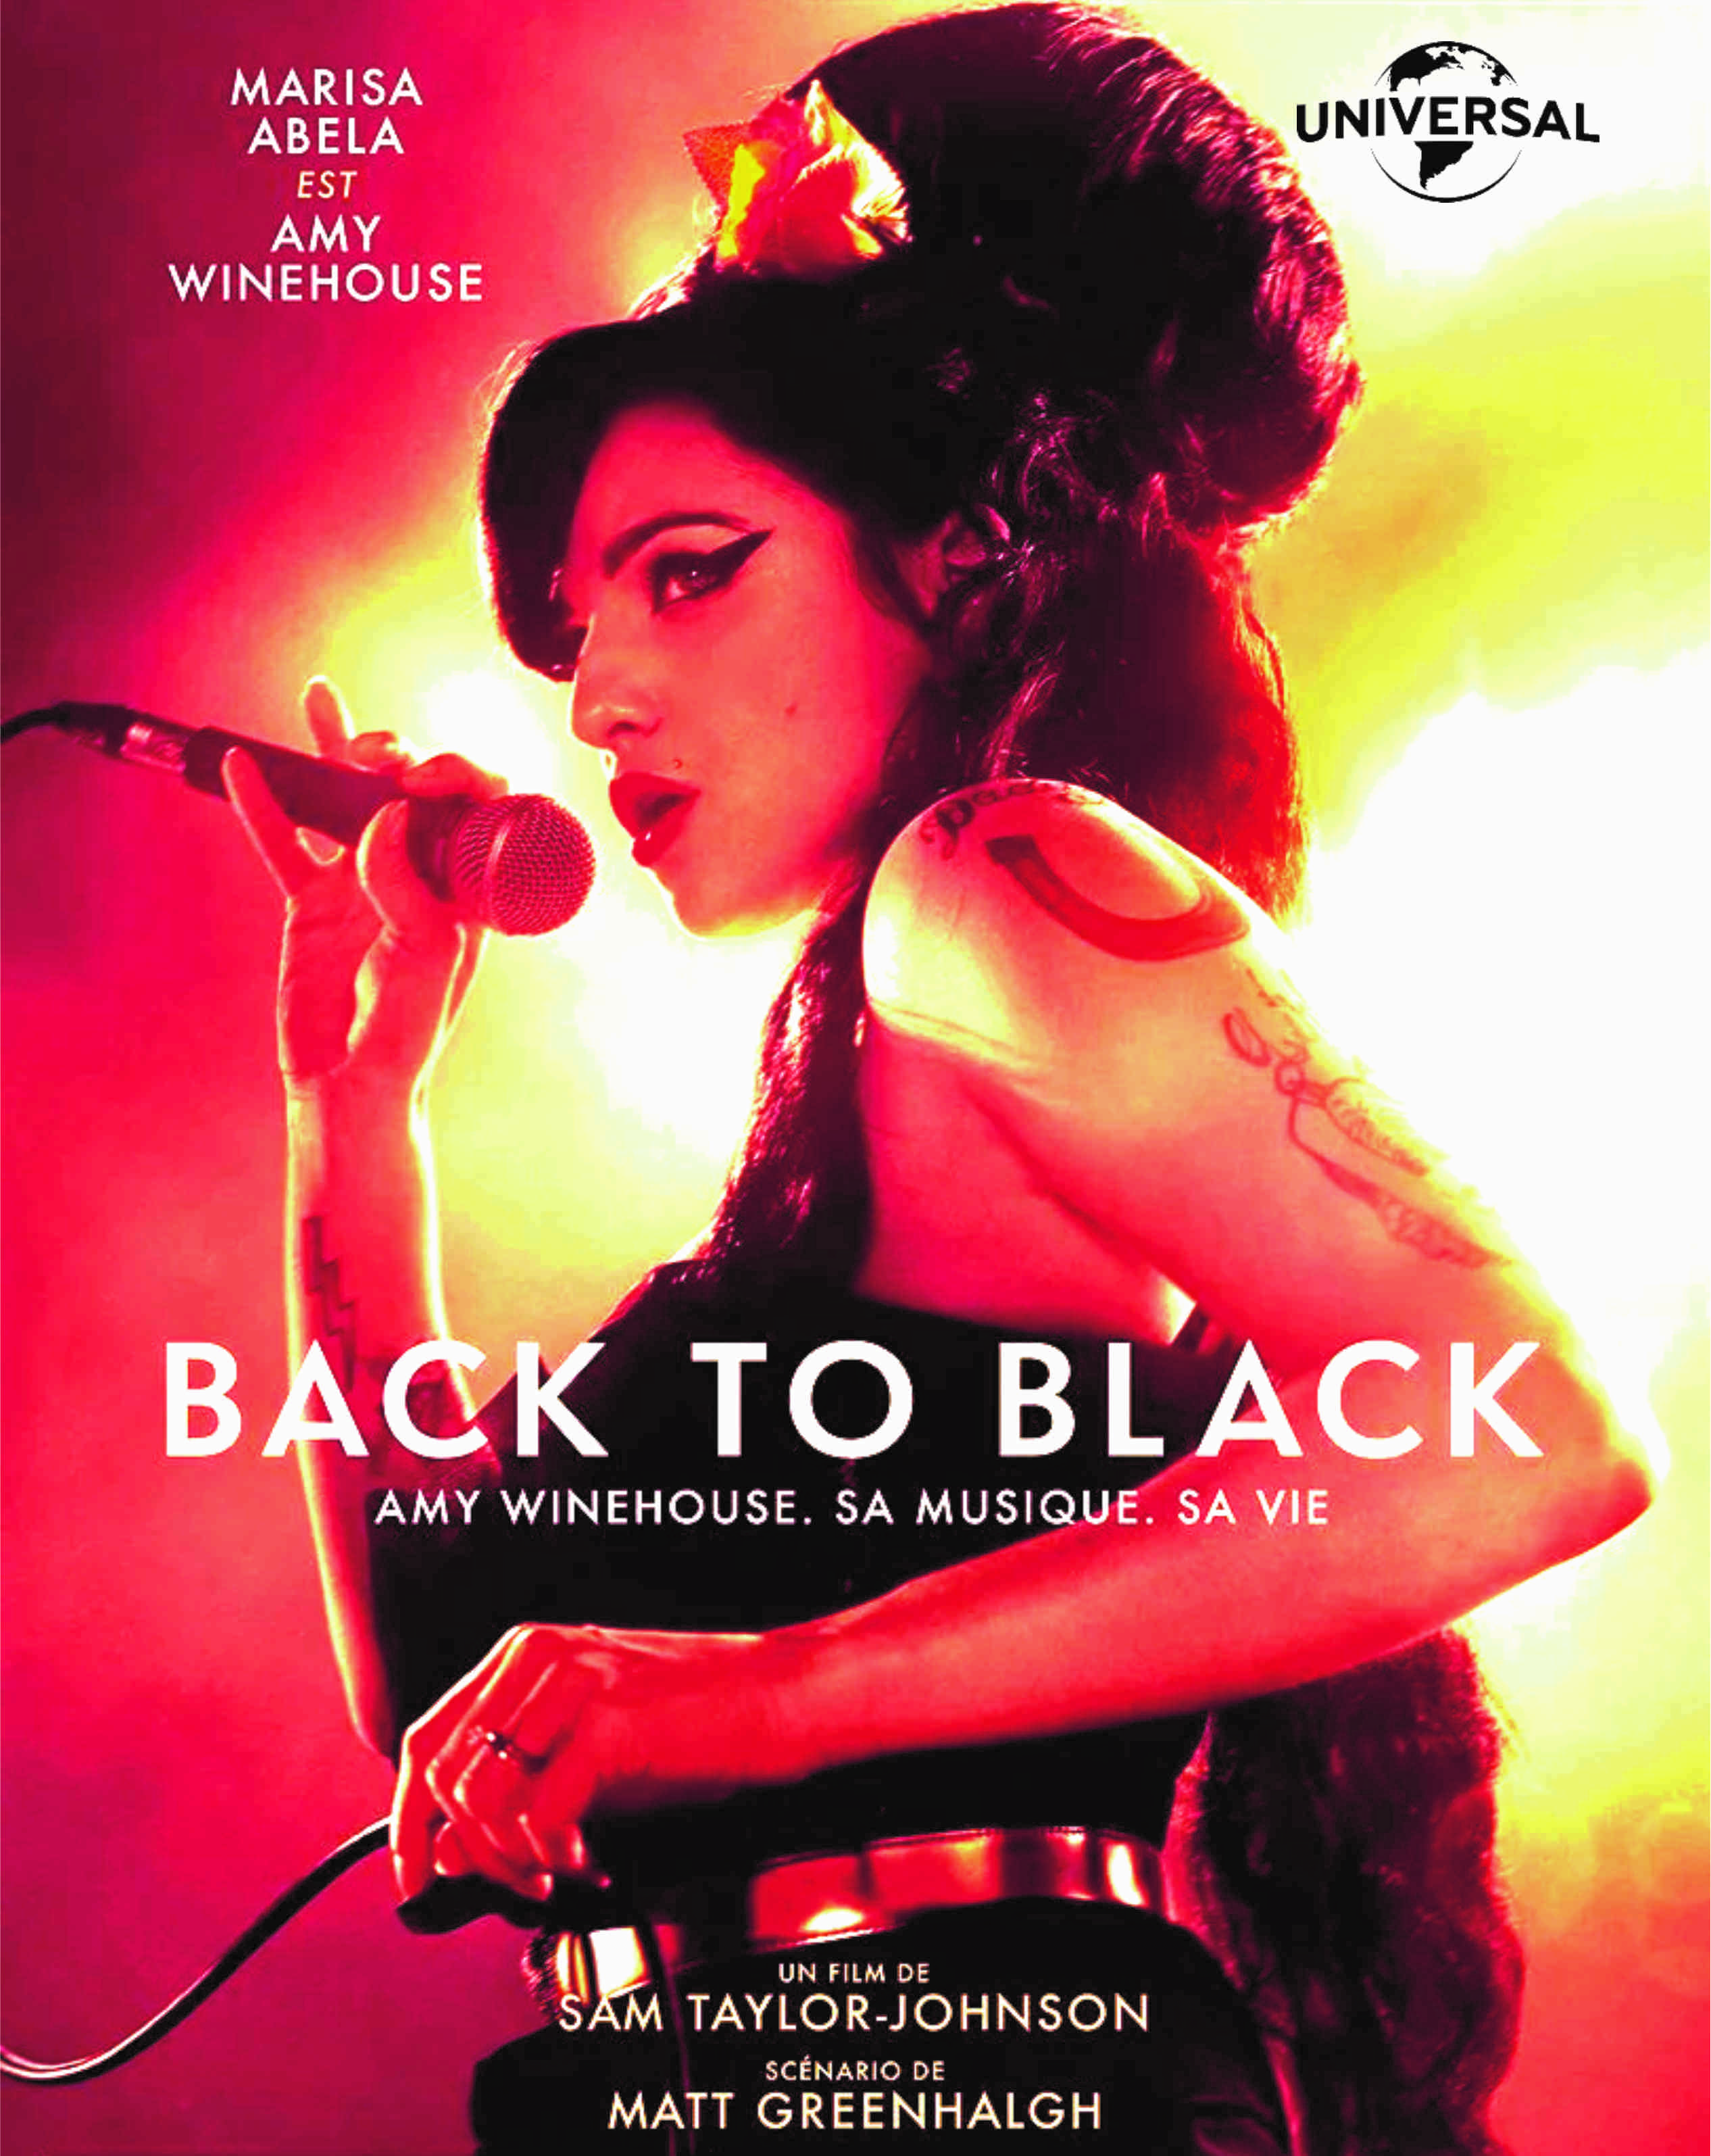 BACK TO BLACK  Amy Winehouse